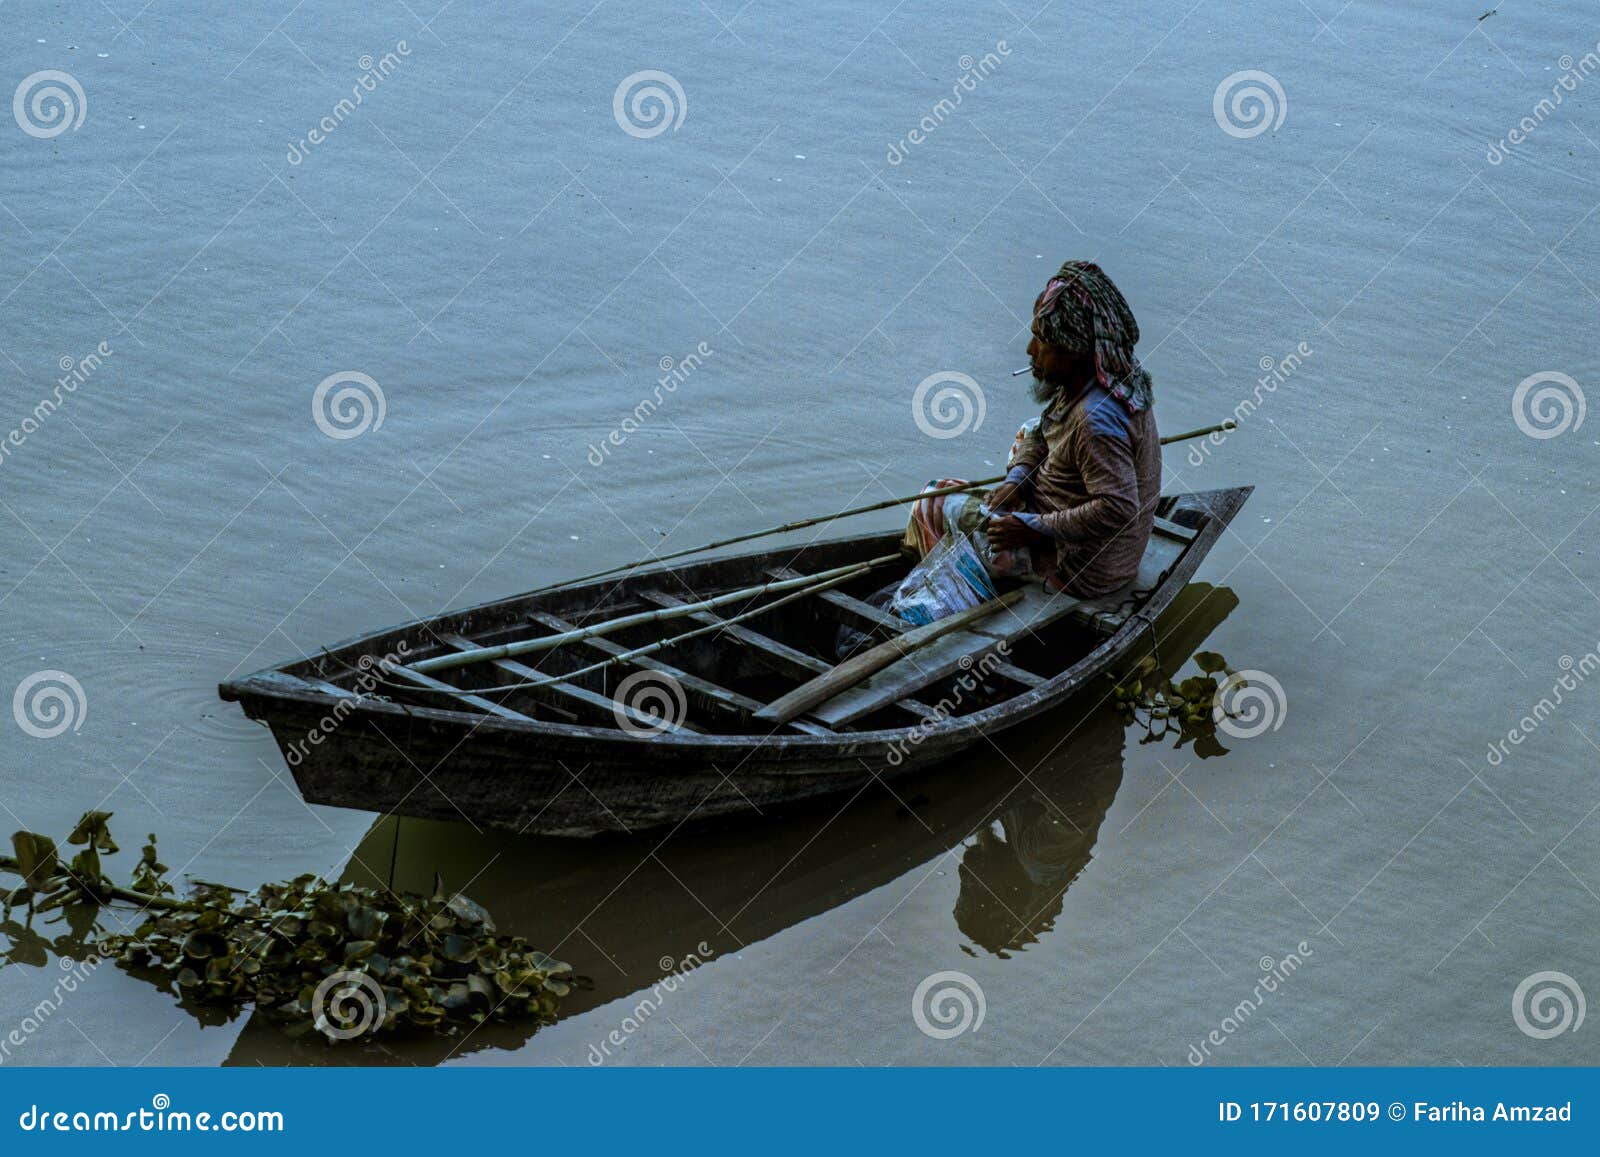 Fishing boat with oldman editorial stock image. Image of oldman - 171607809